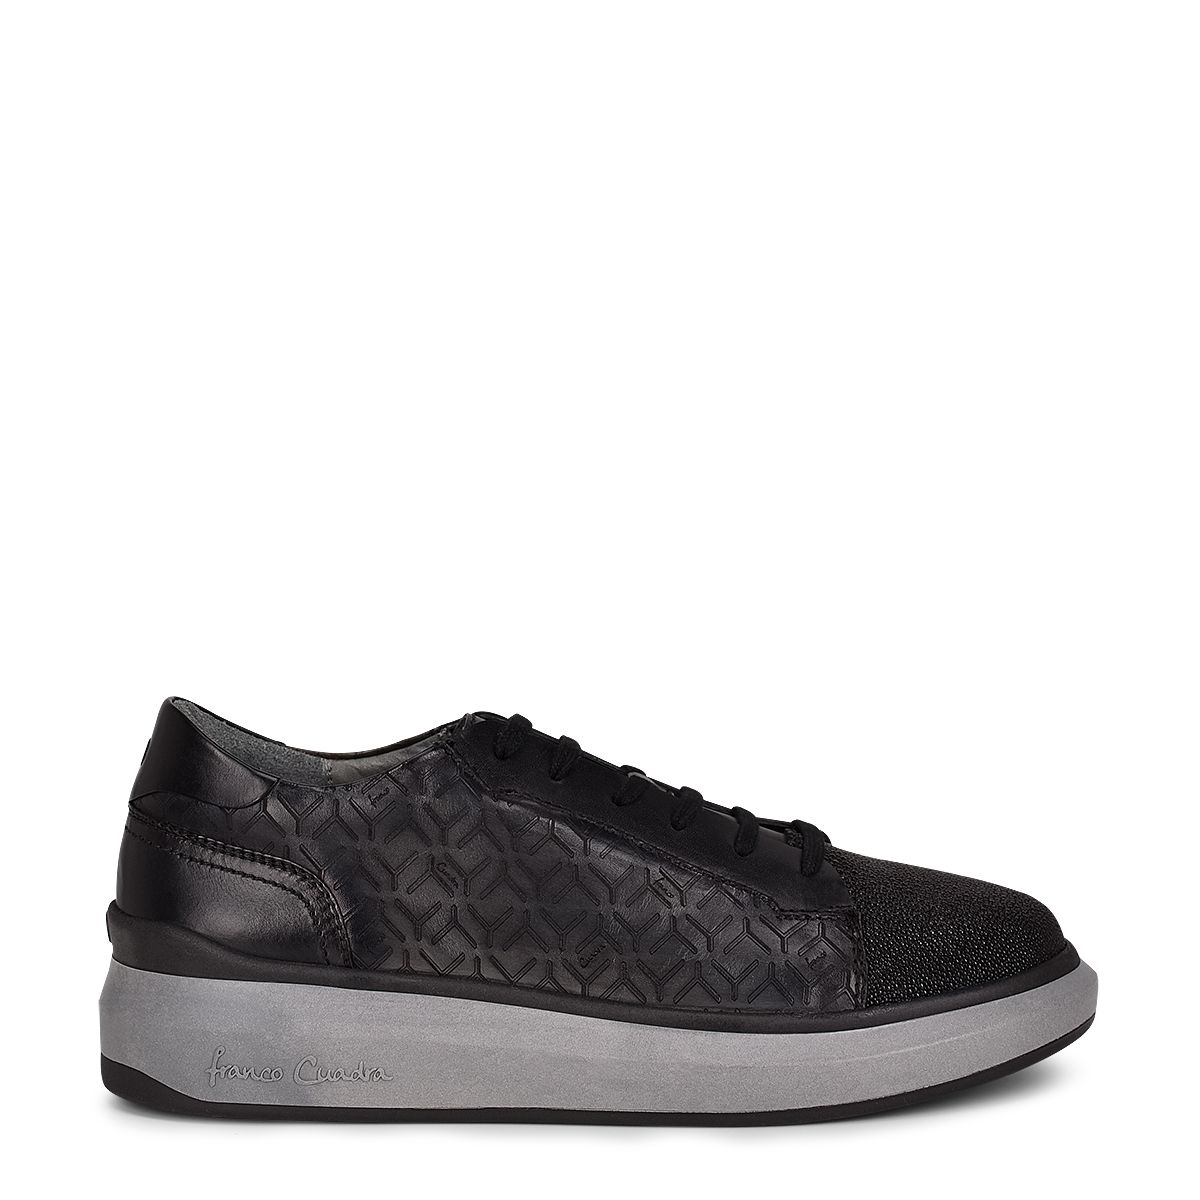 3Y1MTTS - Cuadra black casual fashion stingray sneakers for men-Kuet.us